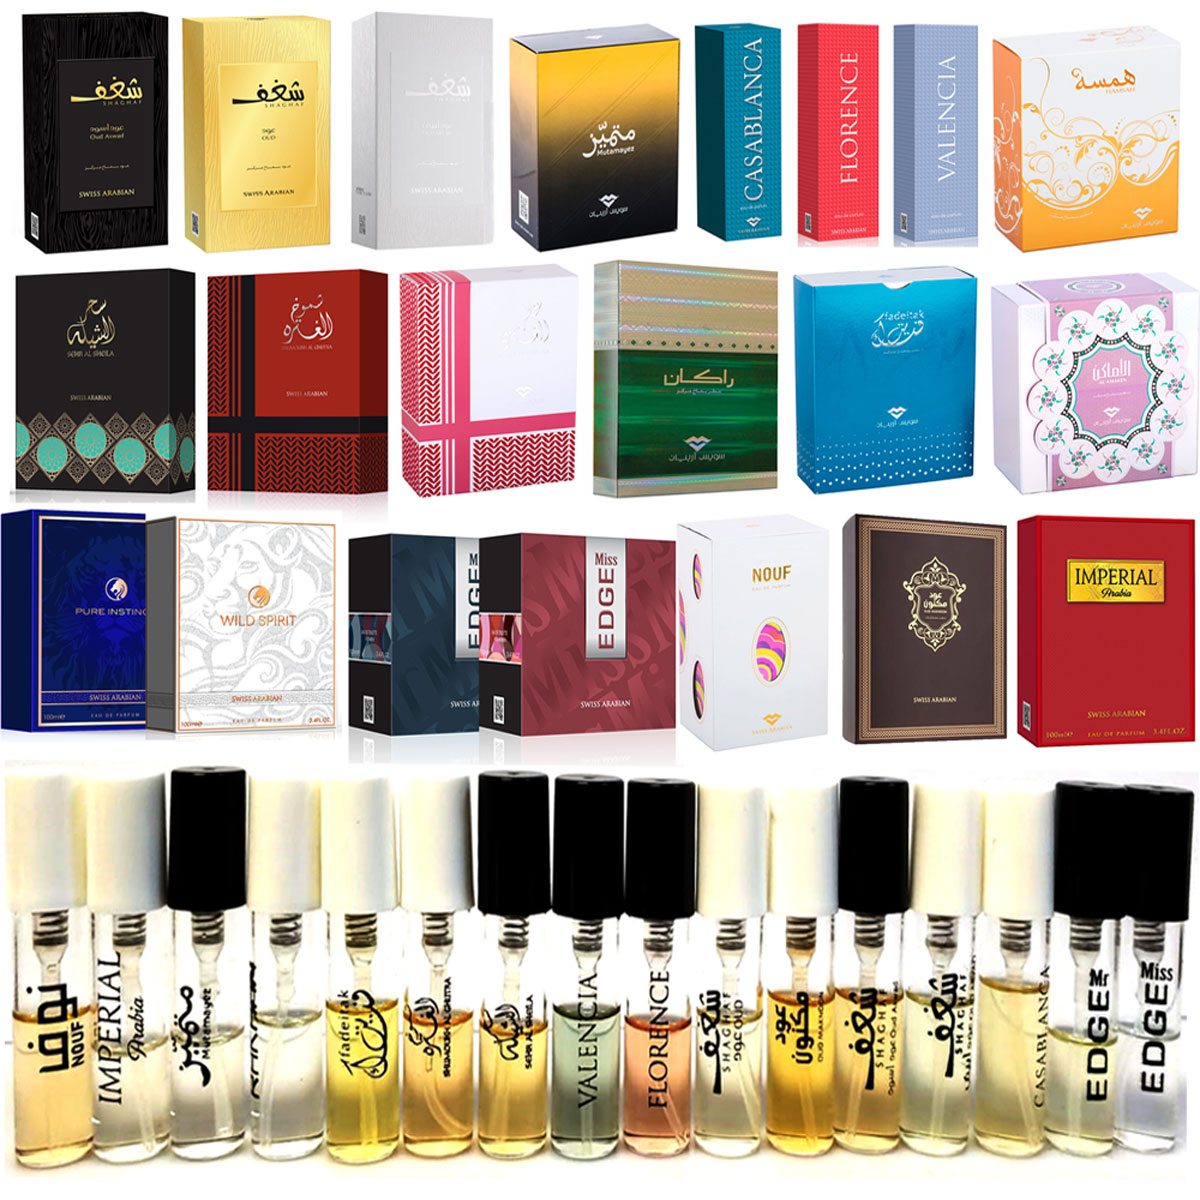 Discounted perfume samples